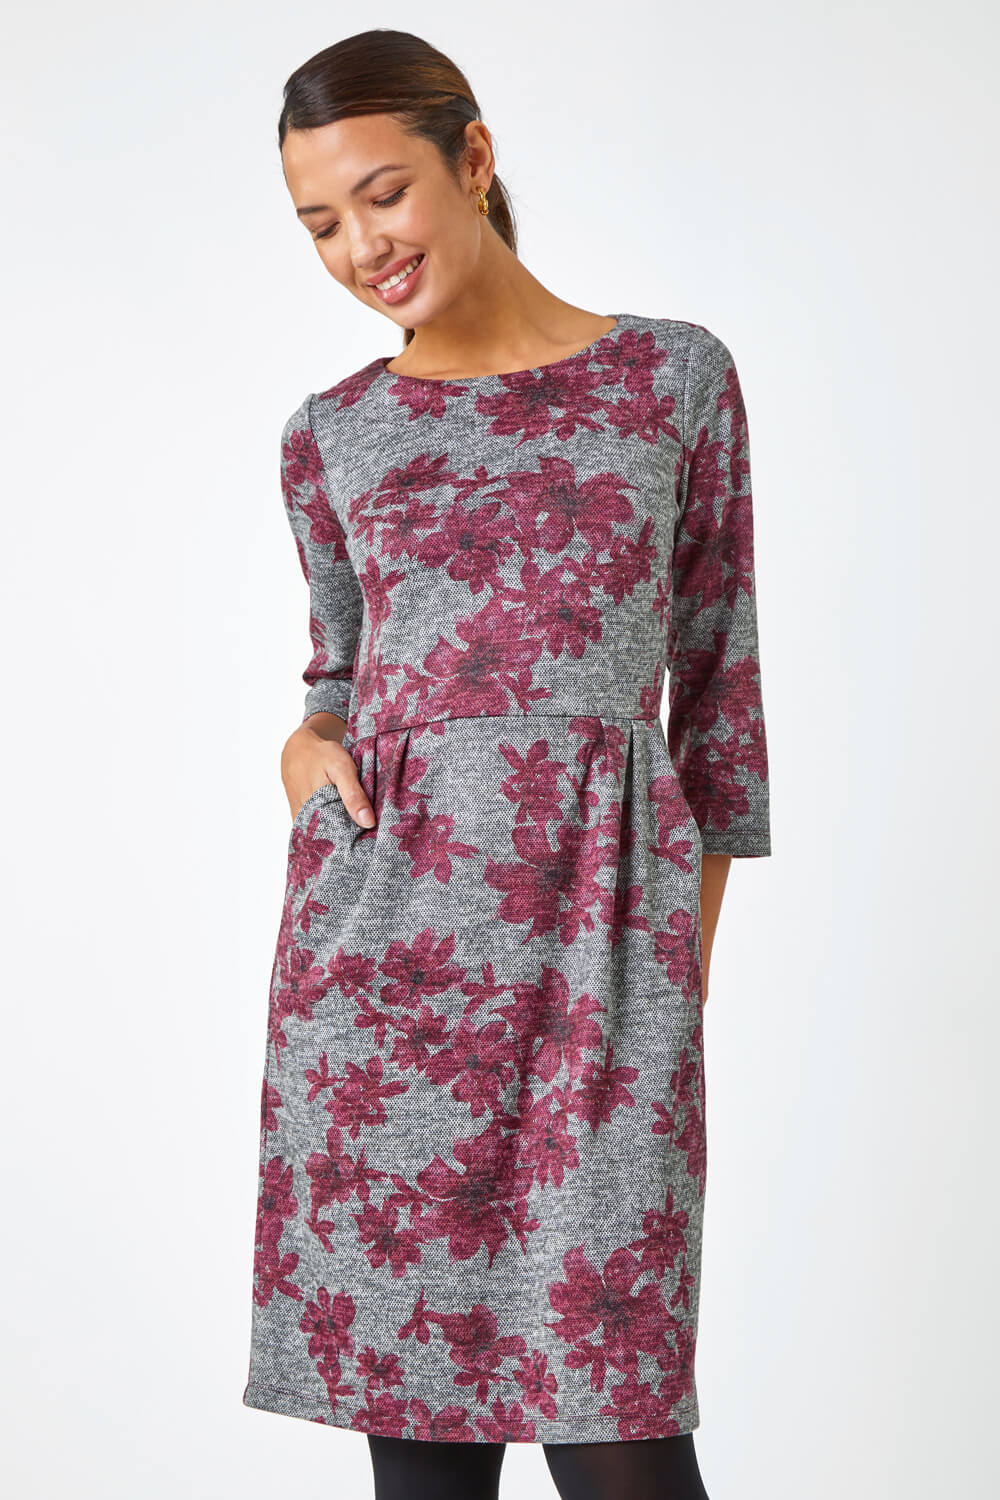 Pink Floral Print Pocket Stretch Dress | Roman UK